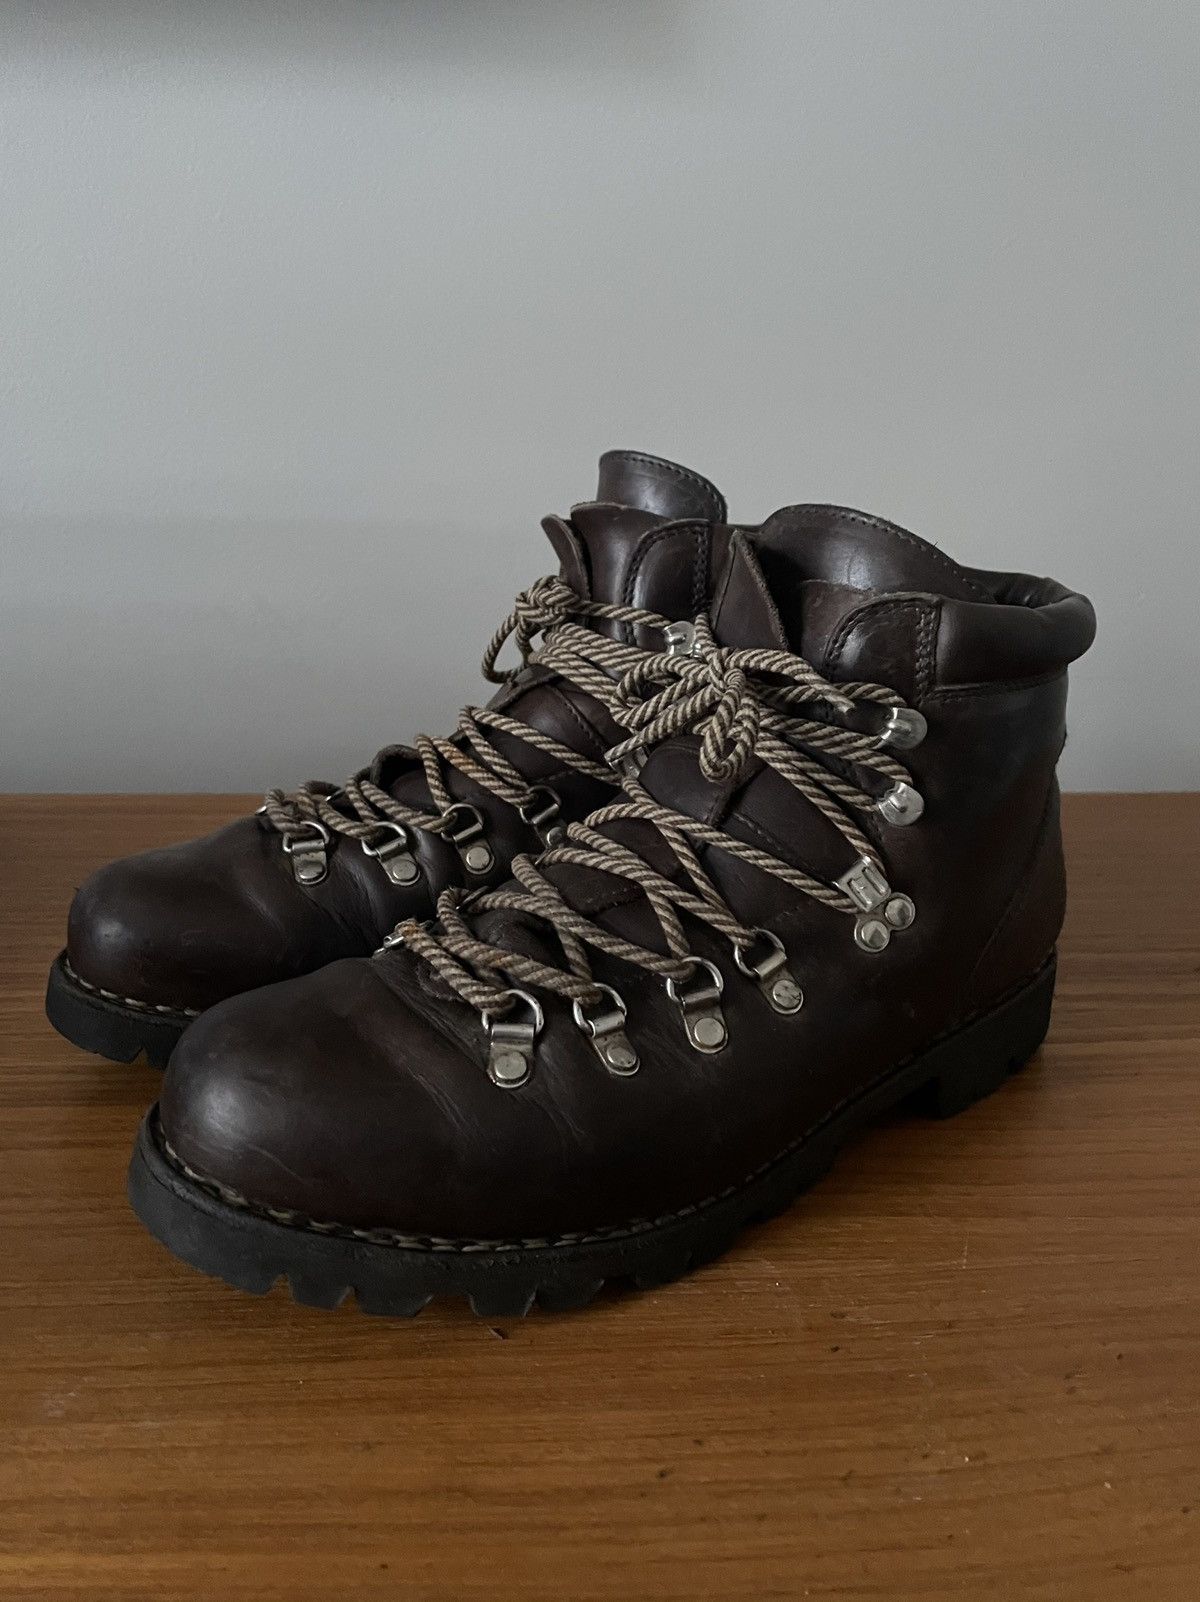 Paraboot Avioraz/Jannu Leather Hiking Boot Size US 8 / EU 41 - 3 Thumbnail